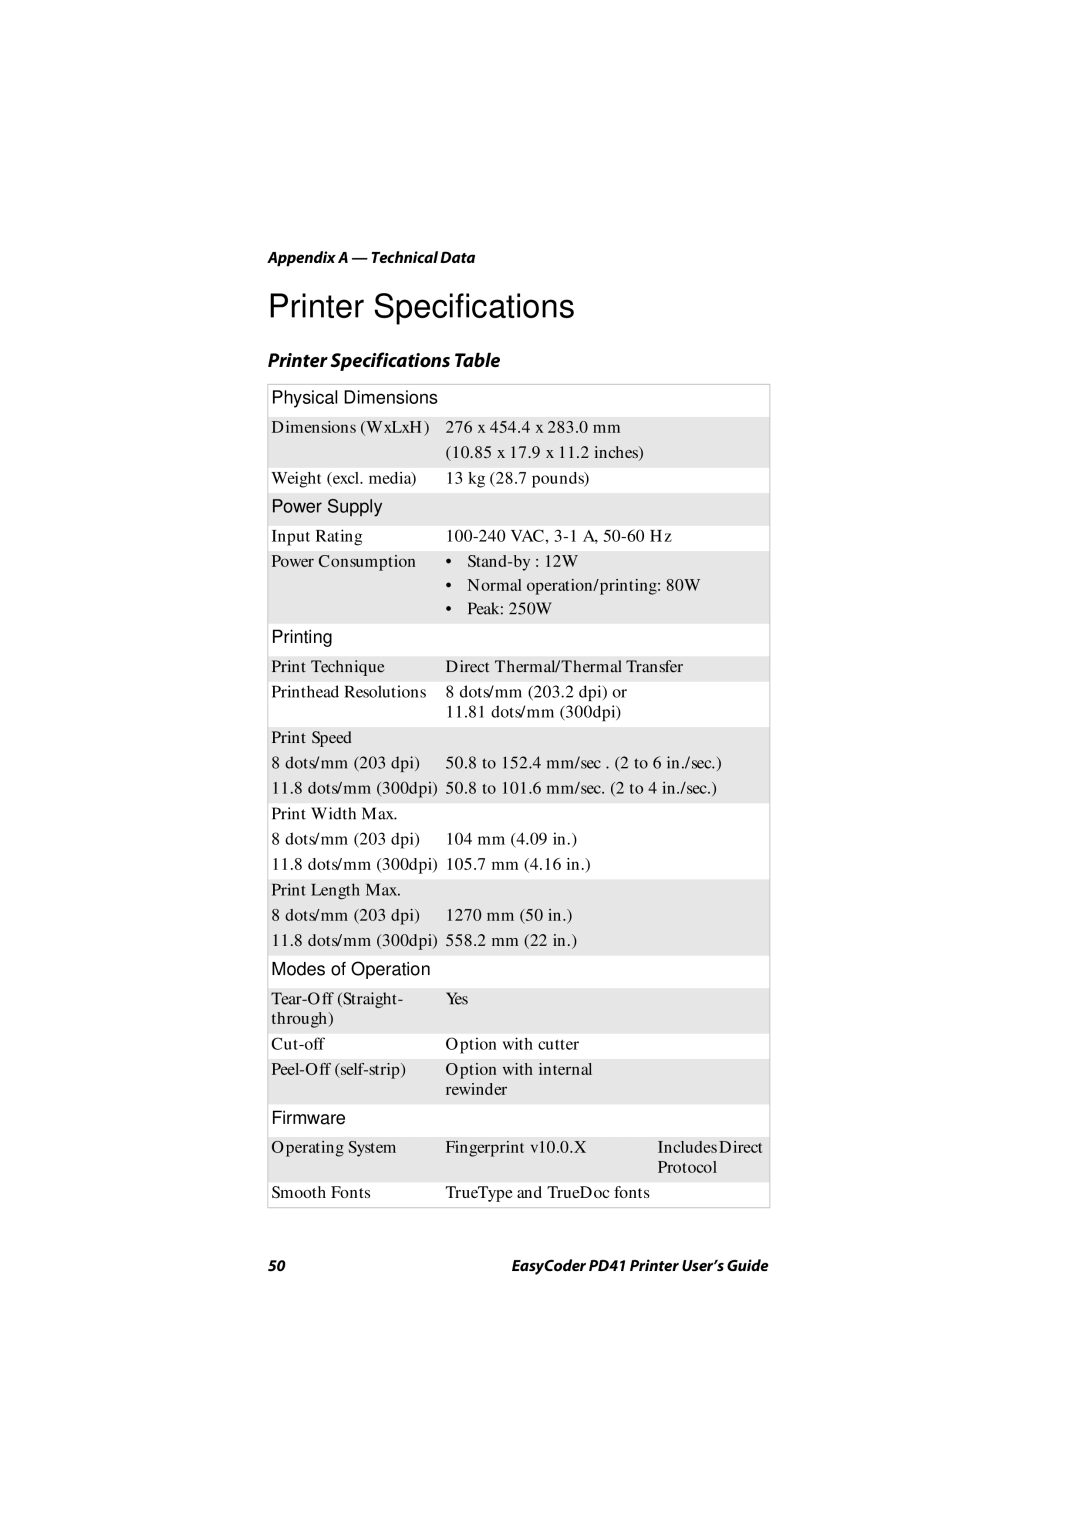 Intermec PD41 manual Printer Specifications Table 